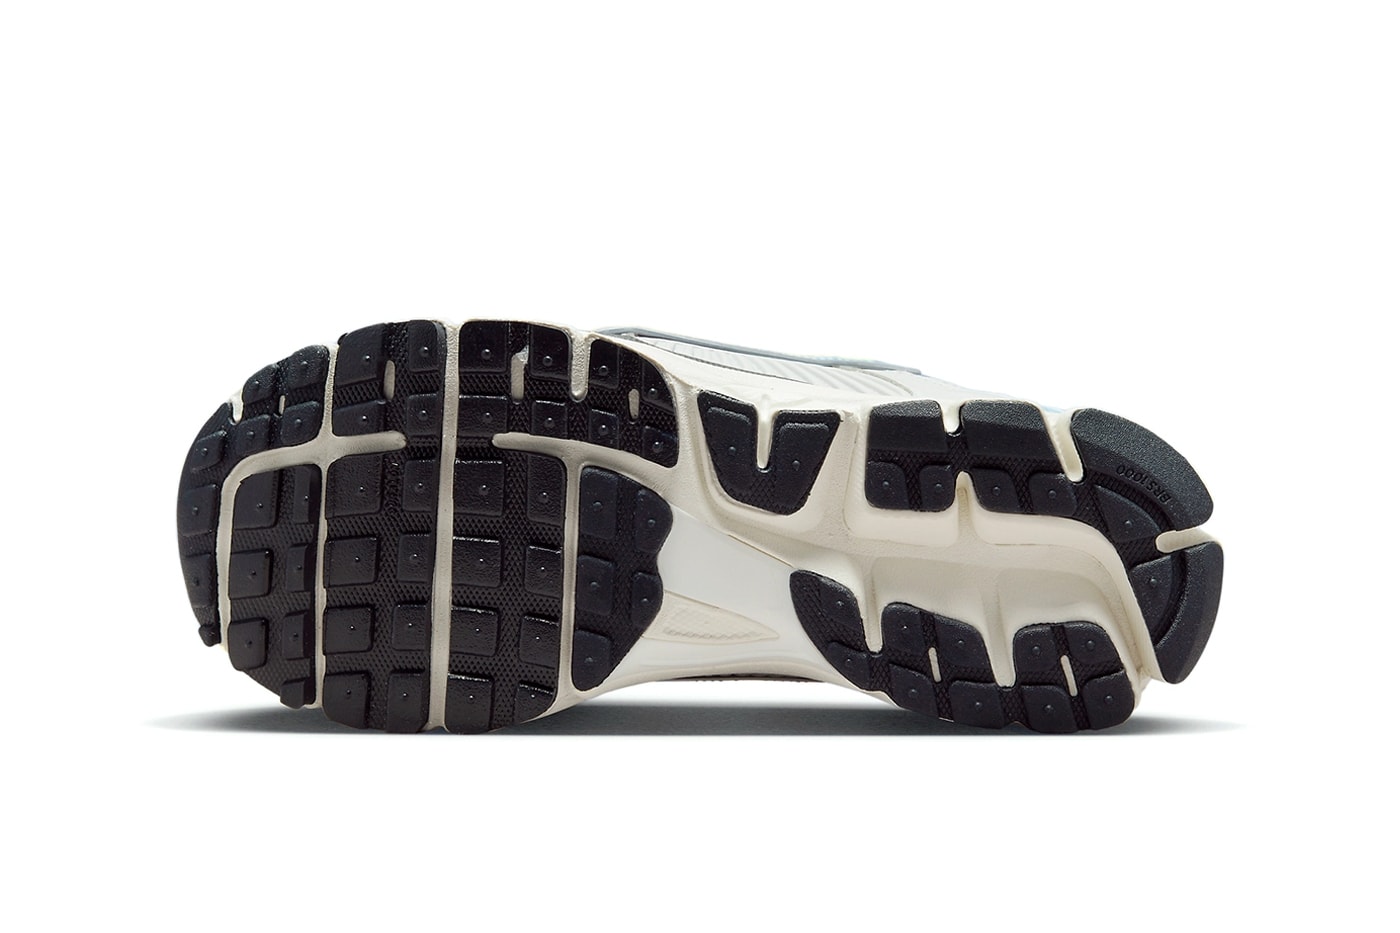 Nike Zoom Vomero 5 grey lavender release info date price beaverton bowerman series cream black white